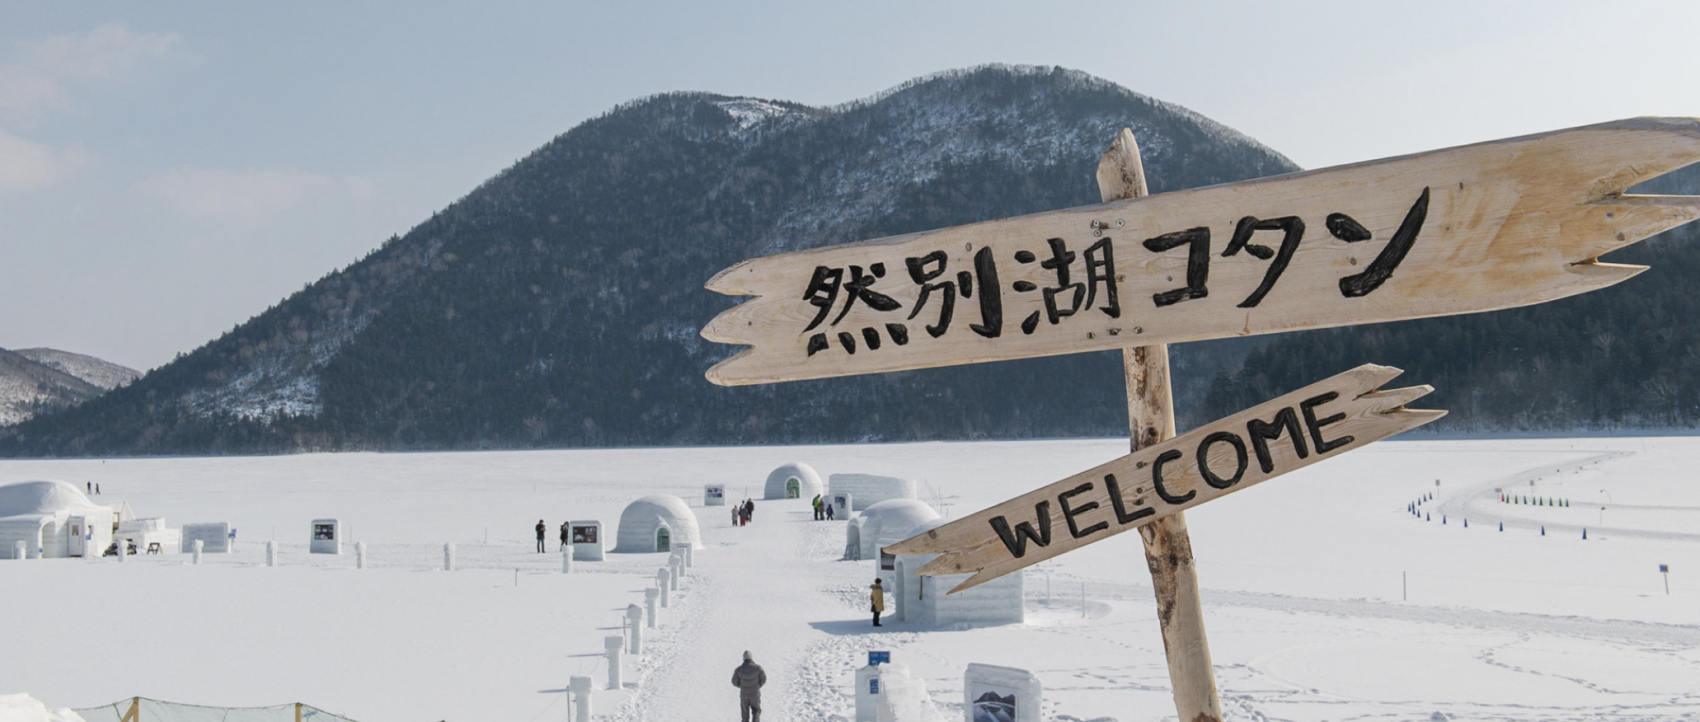 Lake Shikaribetsu Kotan: Japan's Ice Village reappears every winter - Japan  Today